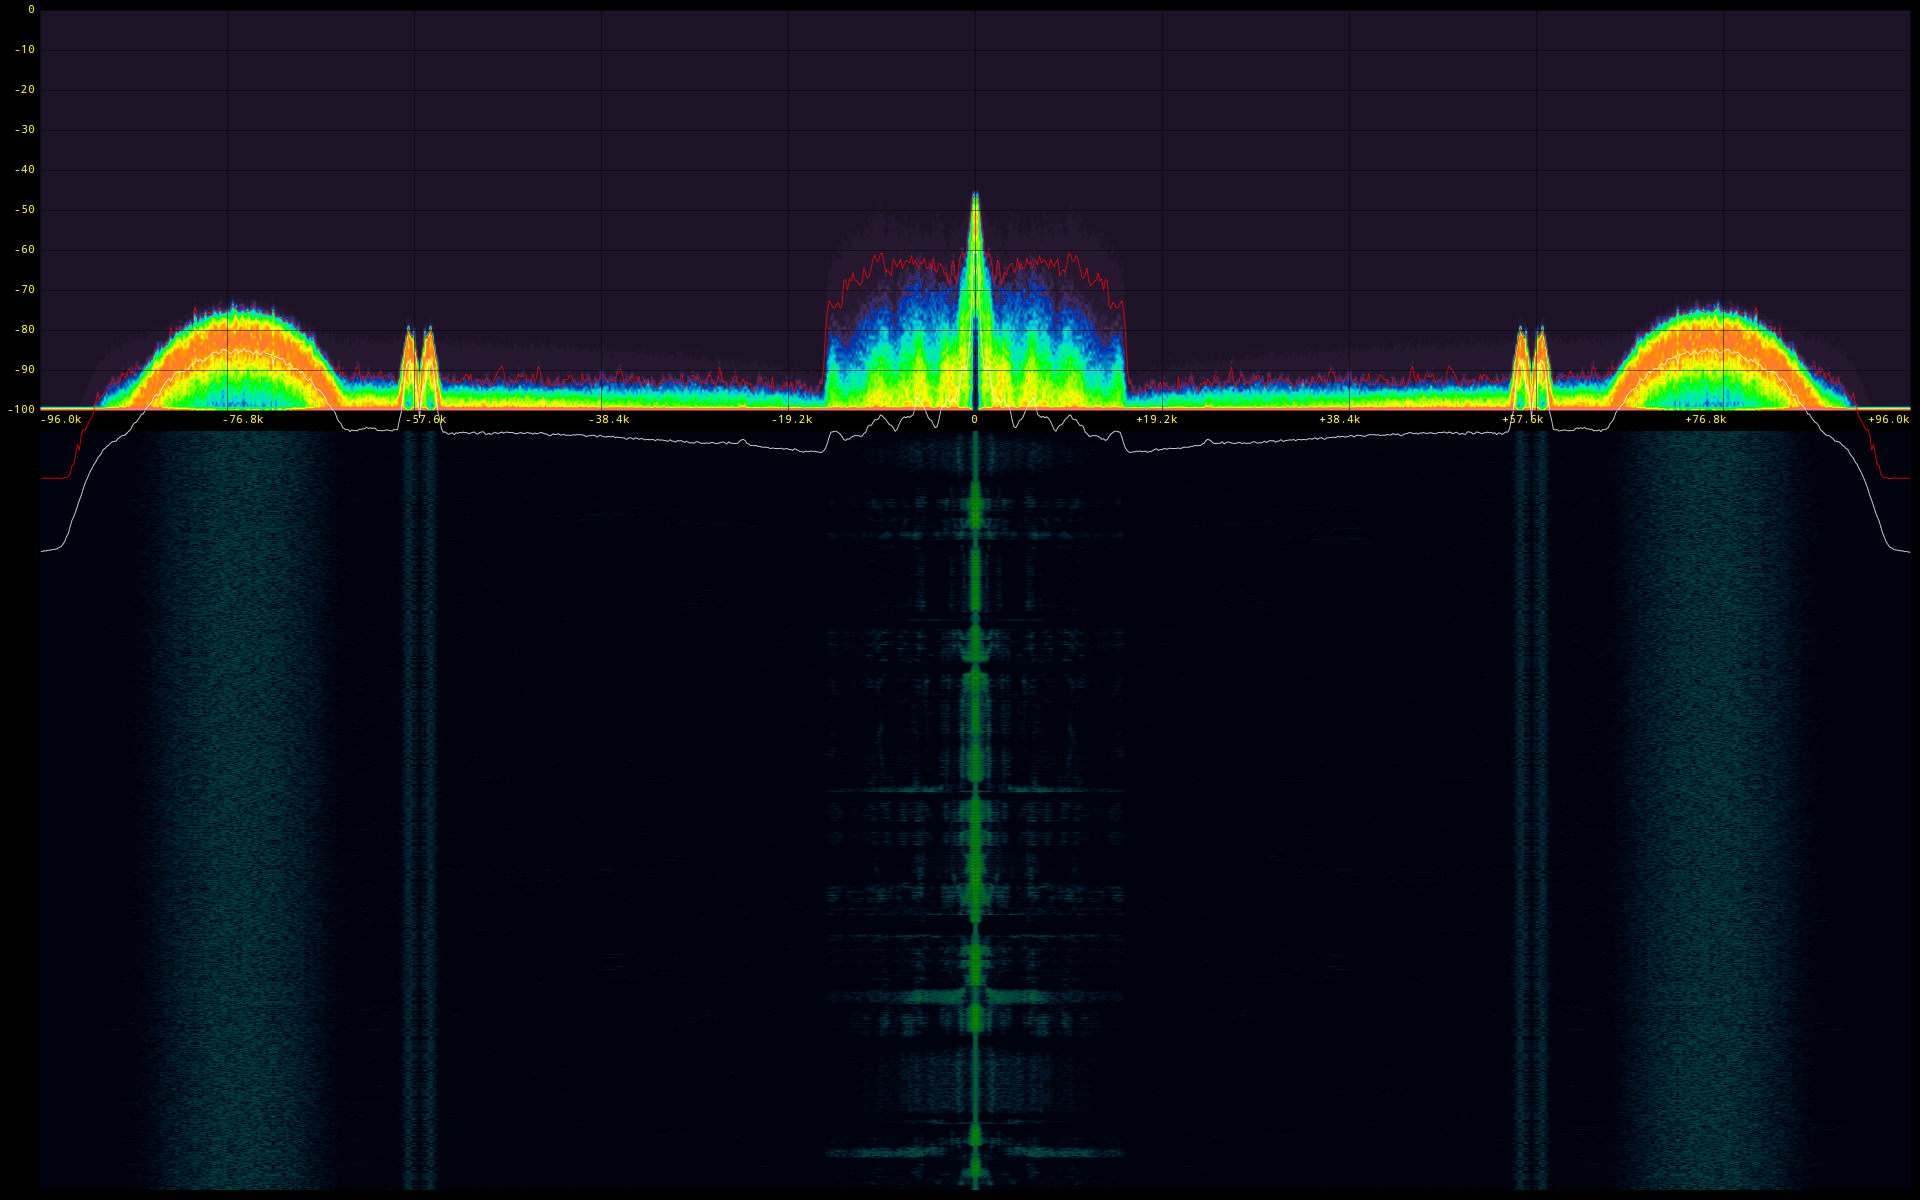 fm-broadcast-band-96k-90m-center-demultiplexed-wbfm-fftp-spectrum-waterfall-fosphor.jpg